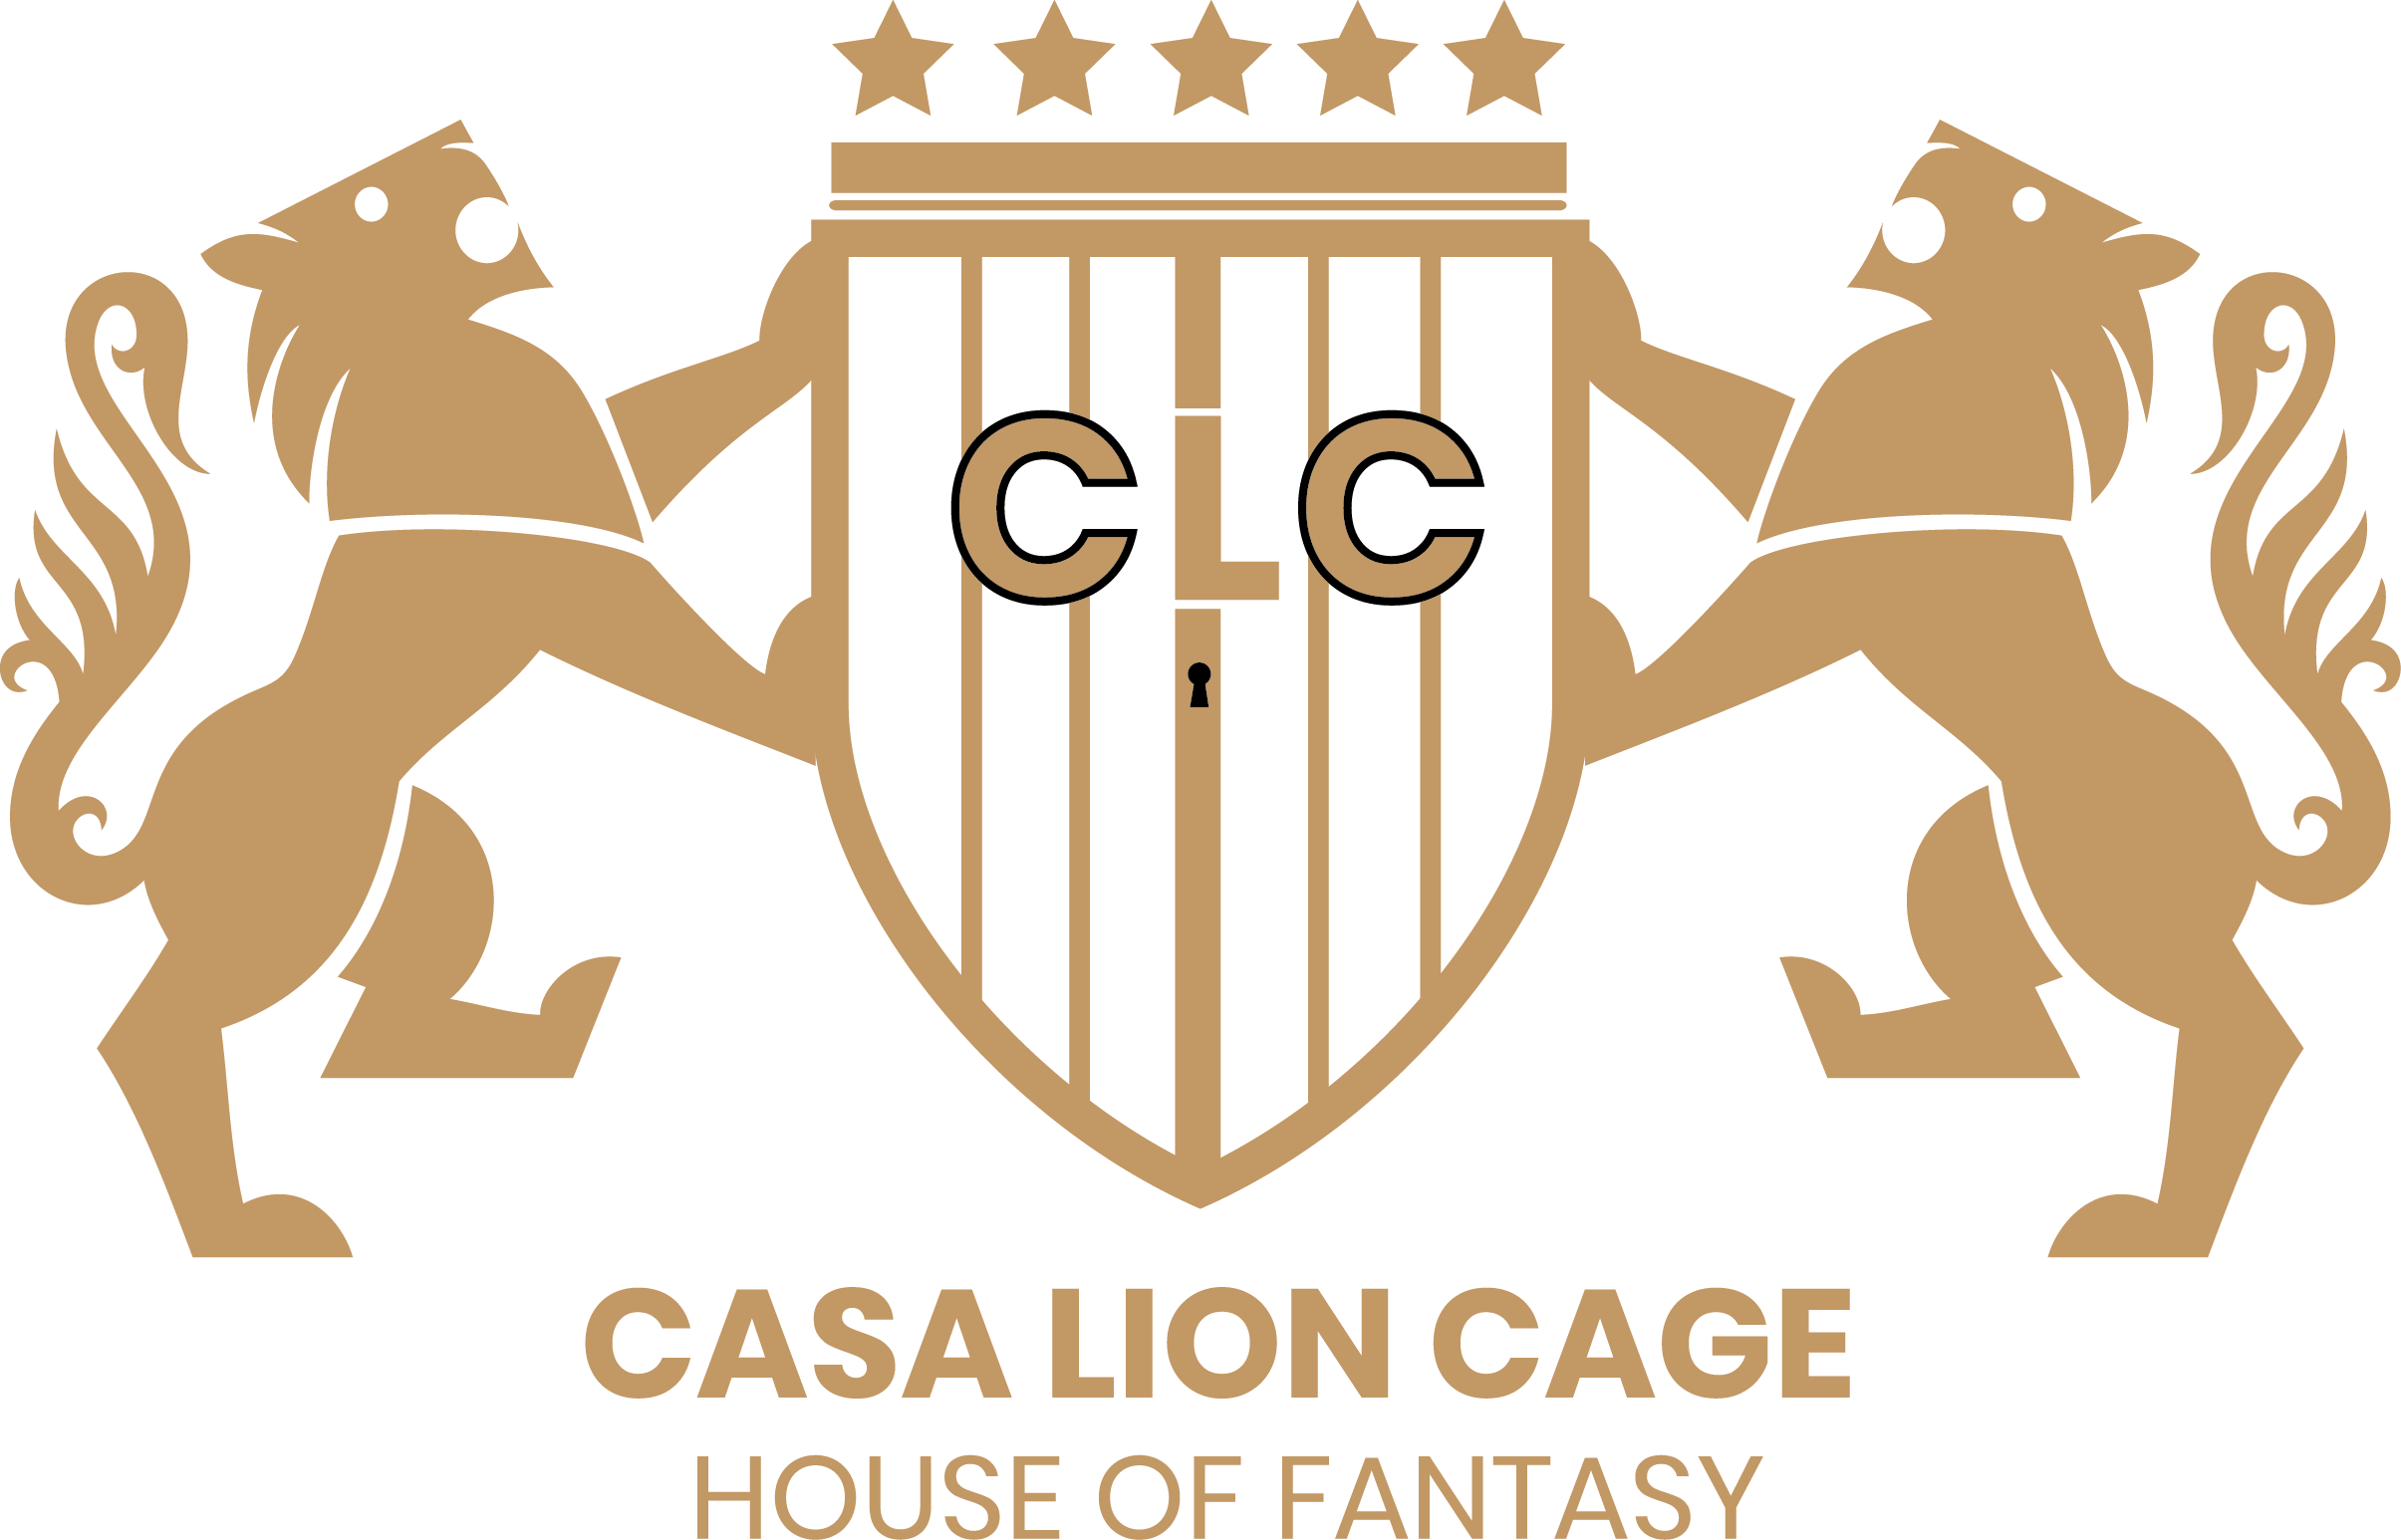 Casa Lion Cage – House of Fantasy